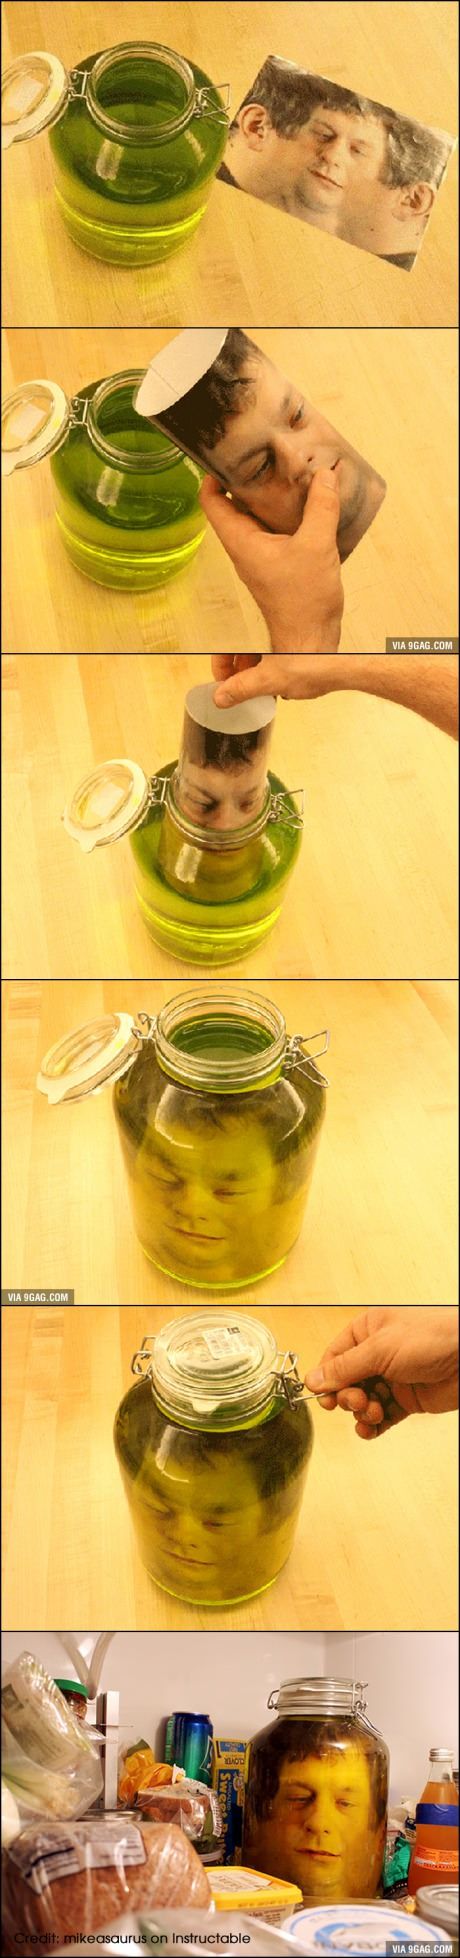 head in a jar prank